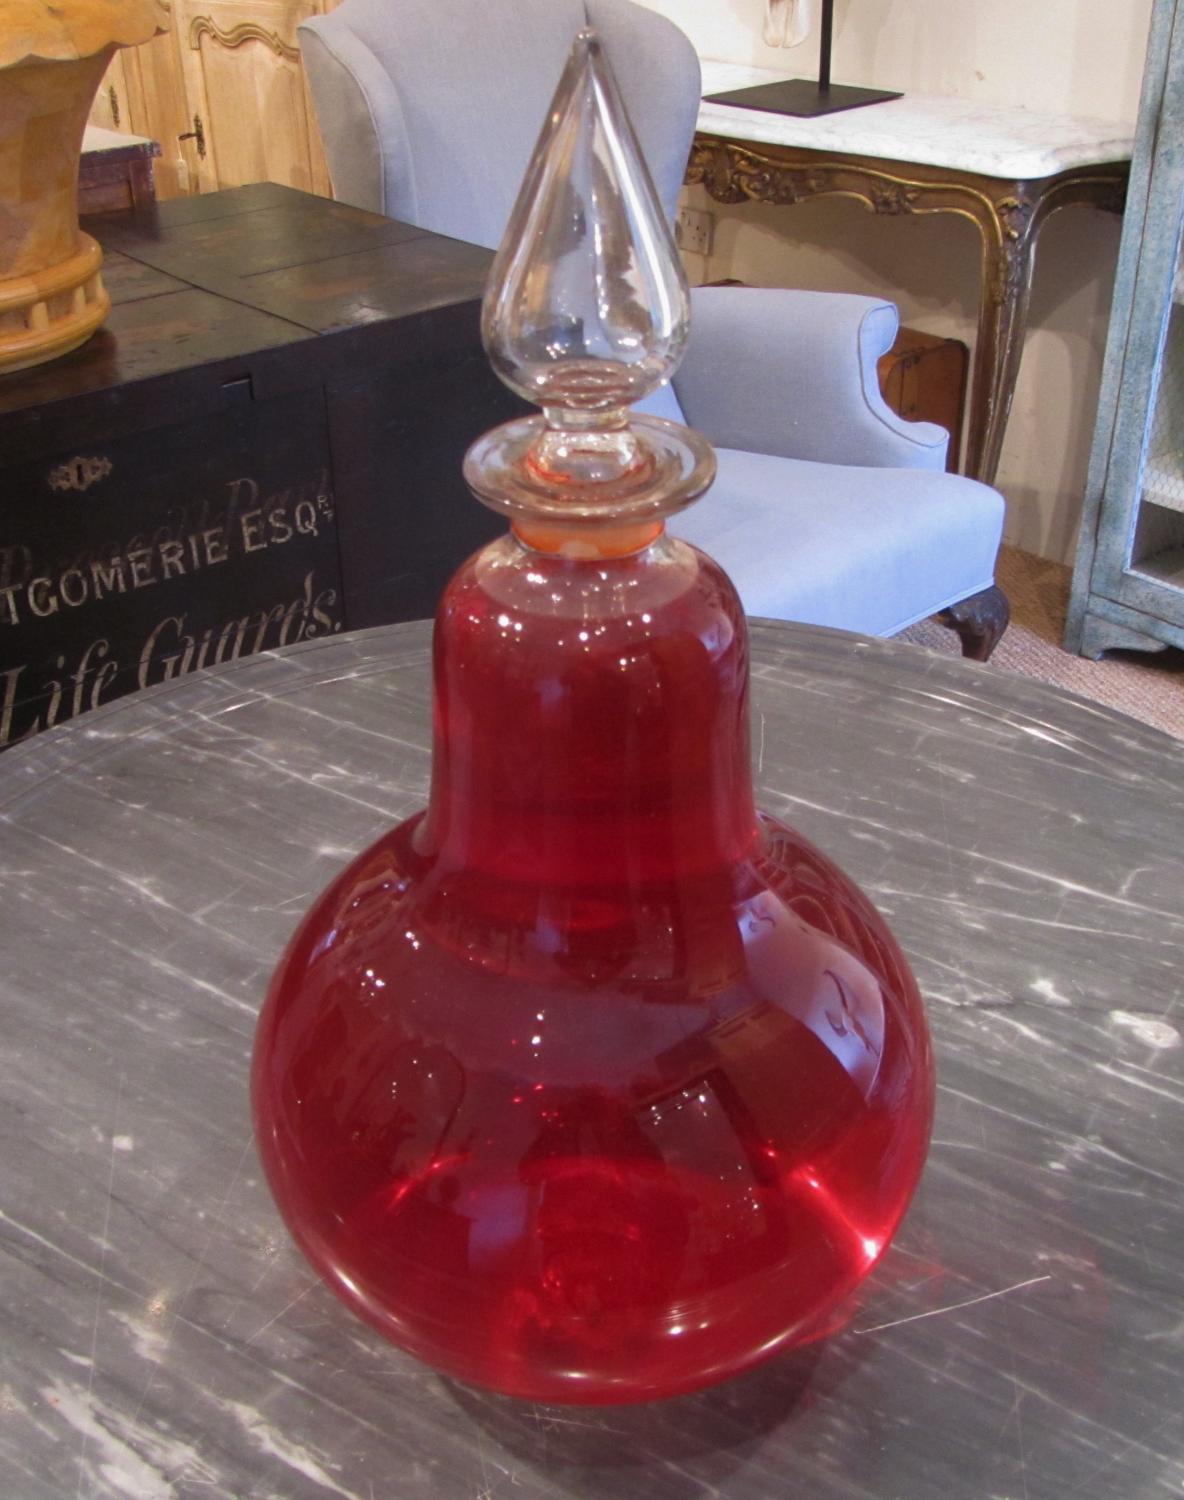 A glass pharmacy bottle